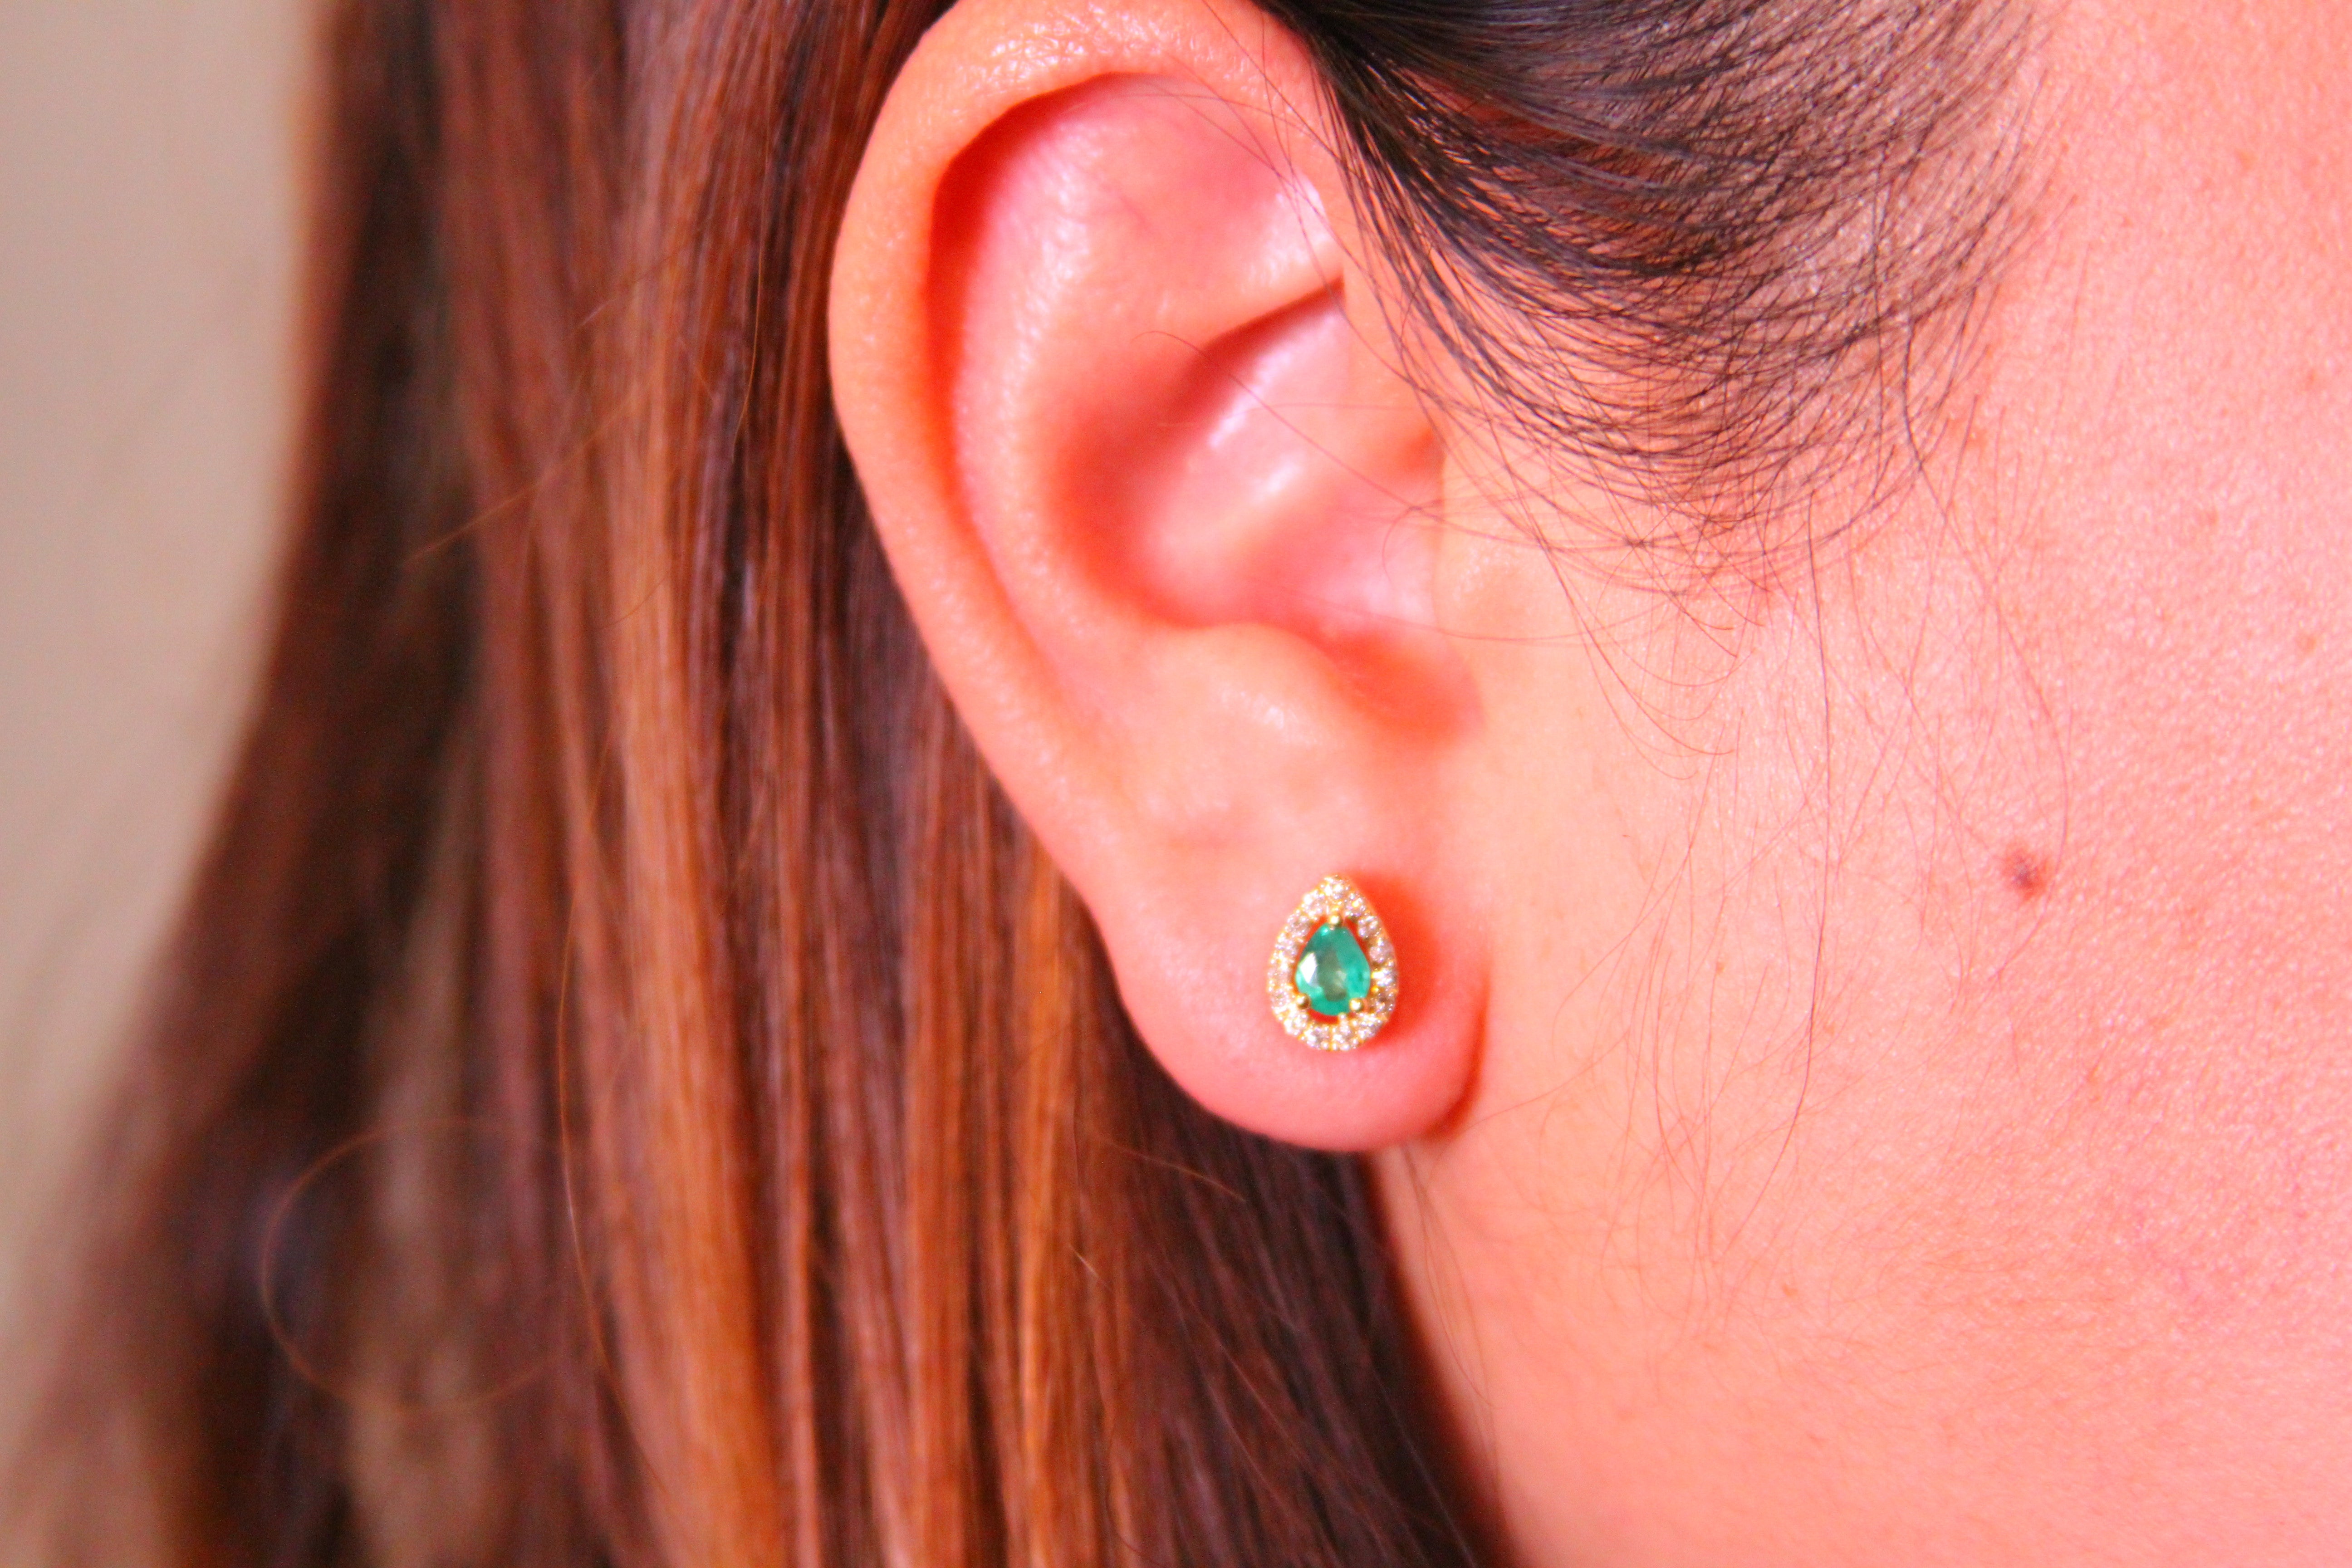 Emerald Diamond Halo Studs Earrings